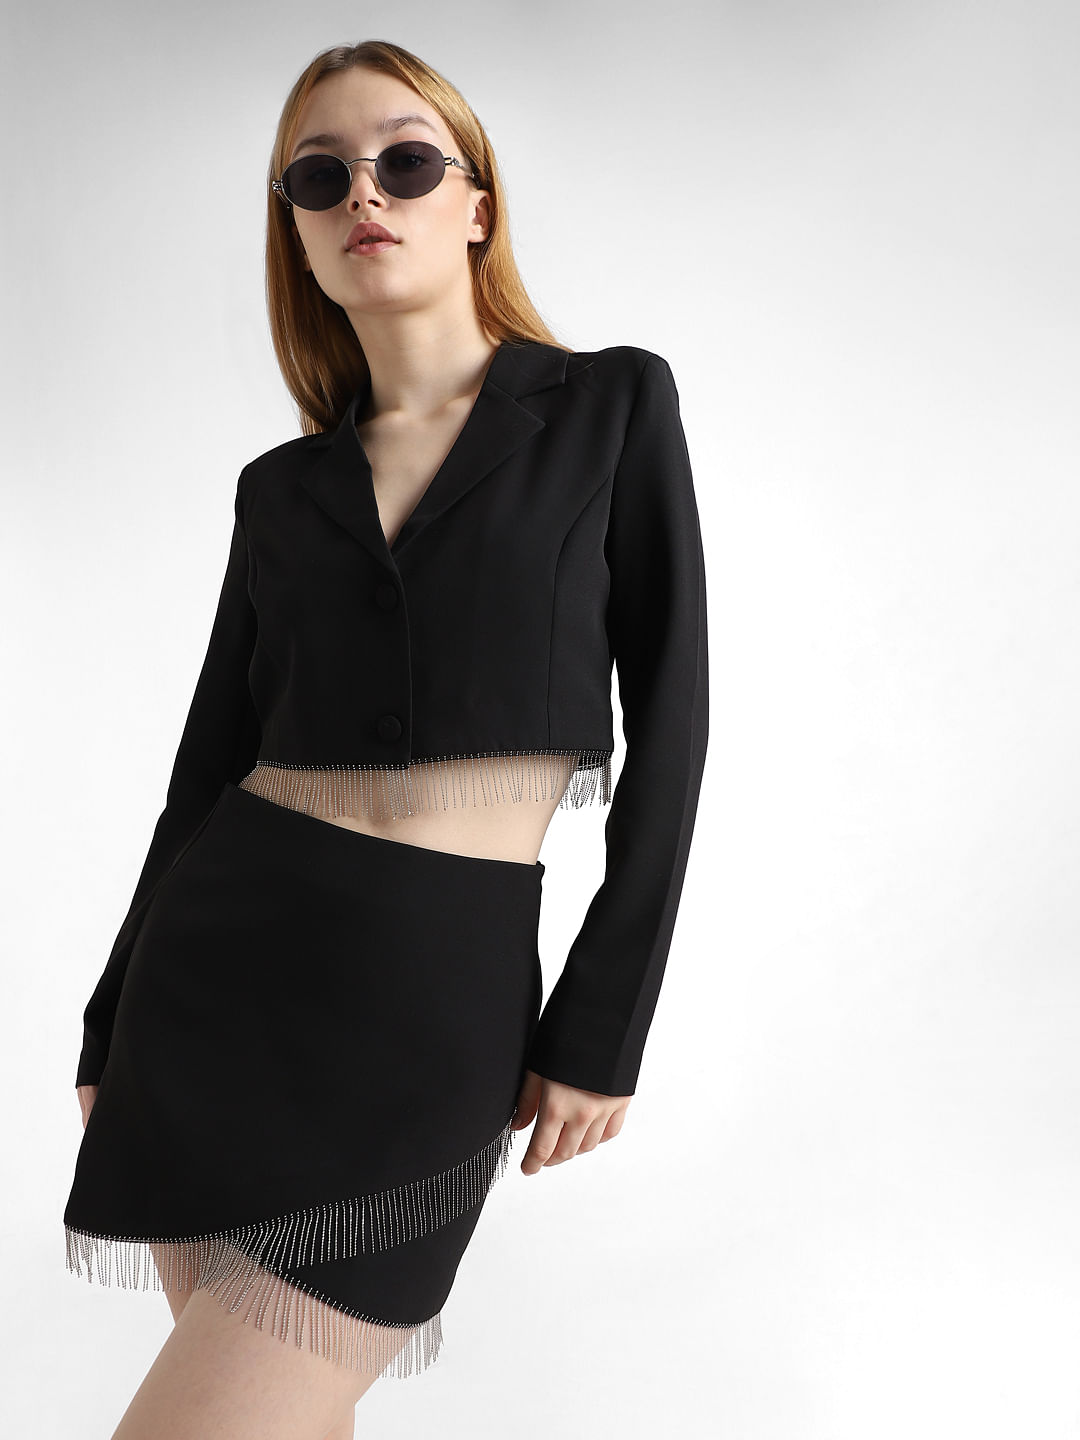 IZF Black Embellished Mini Skirt